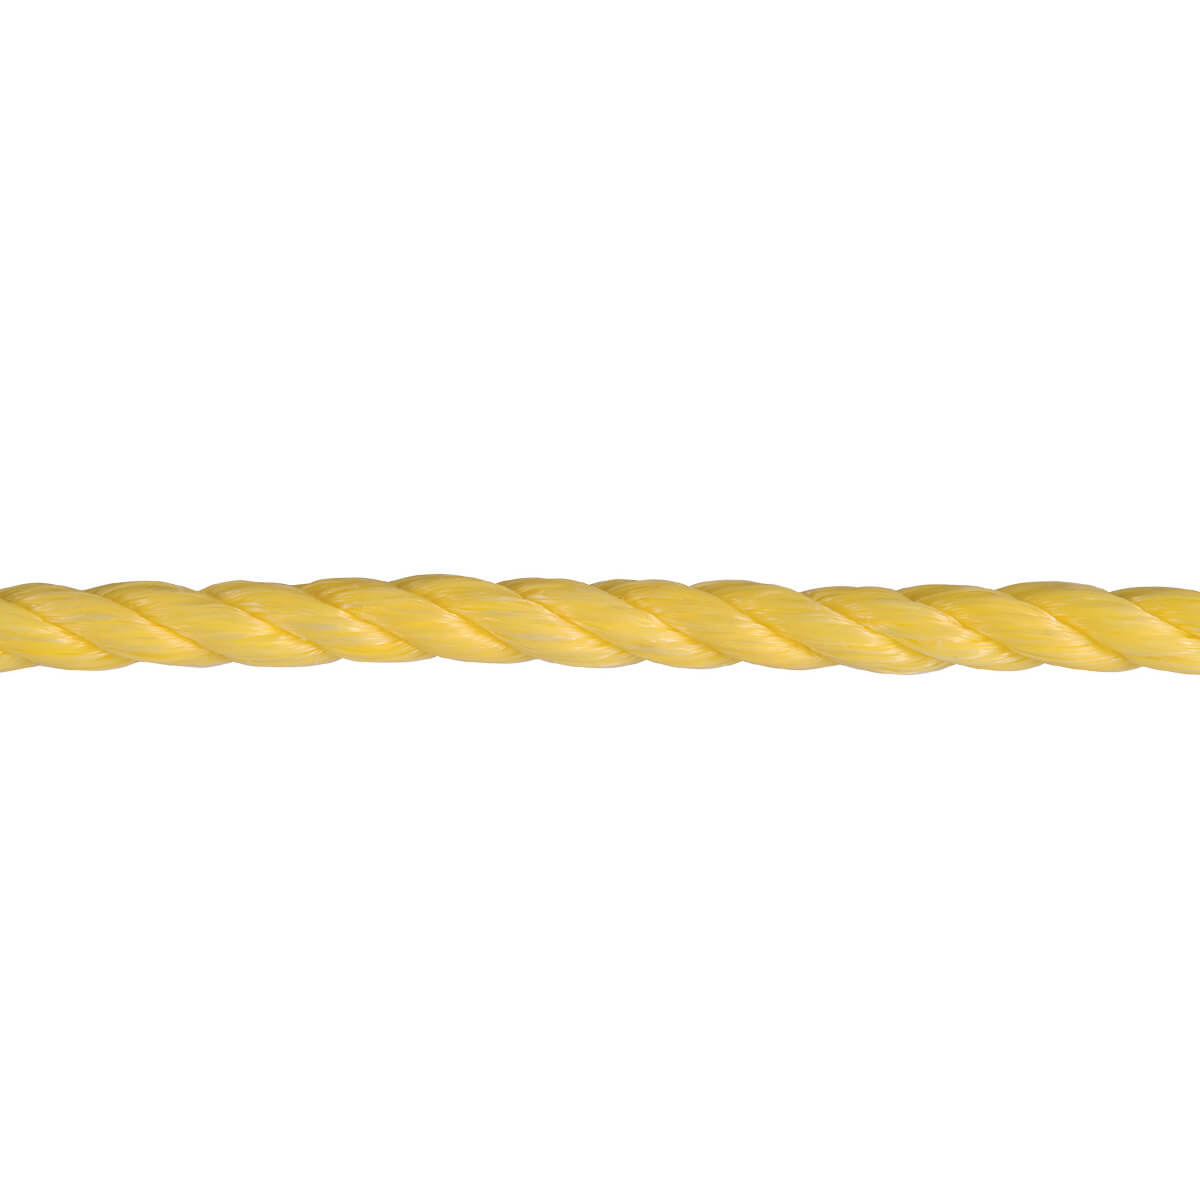 3 Strand Twisted Polypropylene Rope